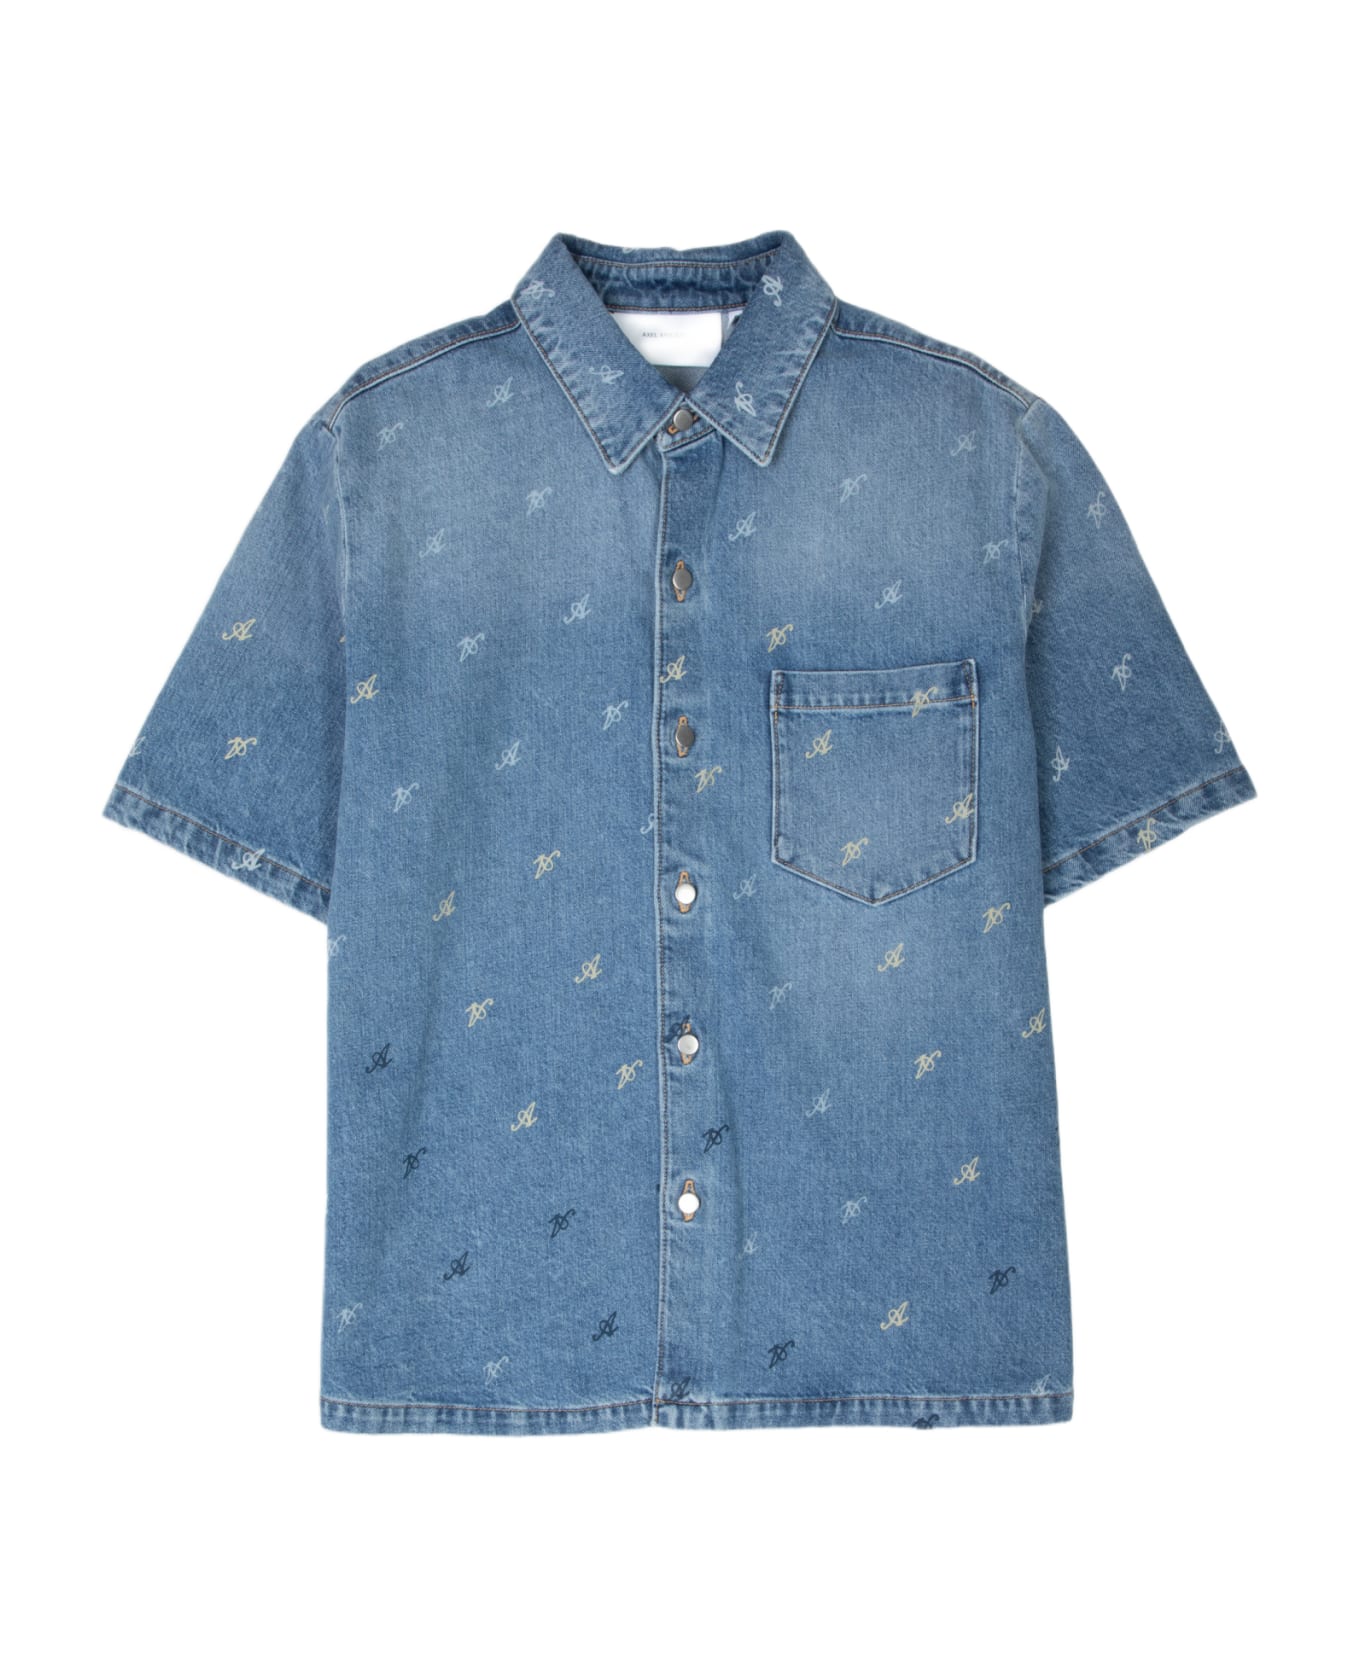 Axel Arigato Miles Shirt Light blue denim shirt with short sleeves - Miles Shirt - Denim blu